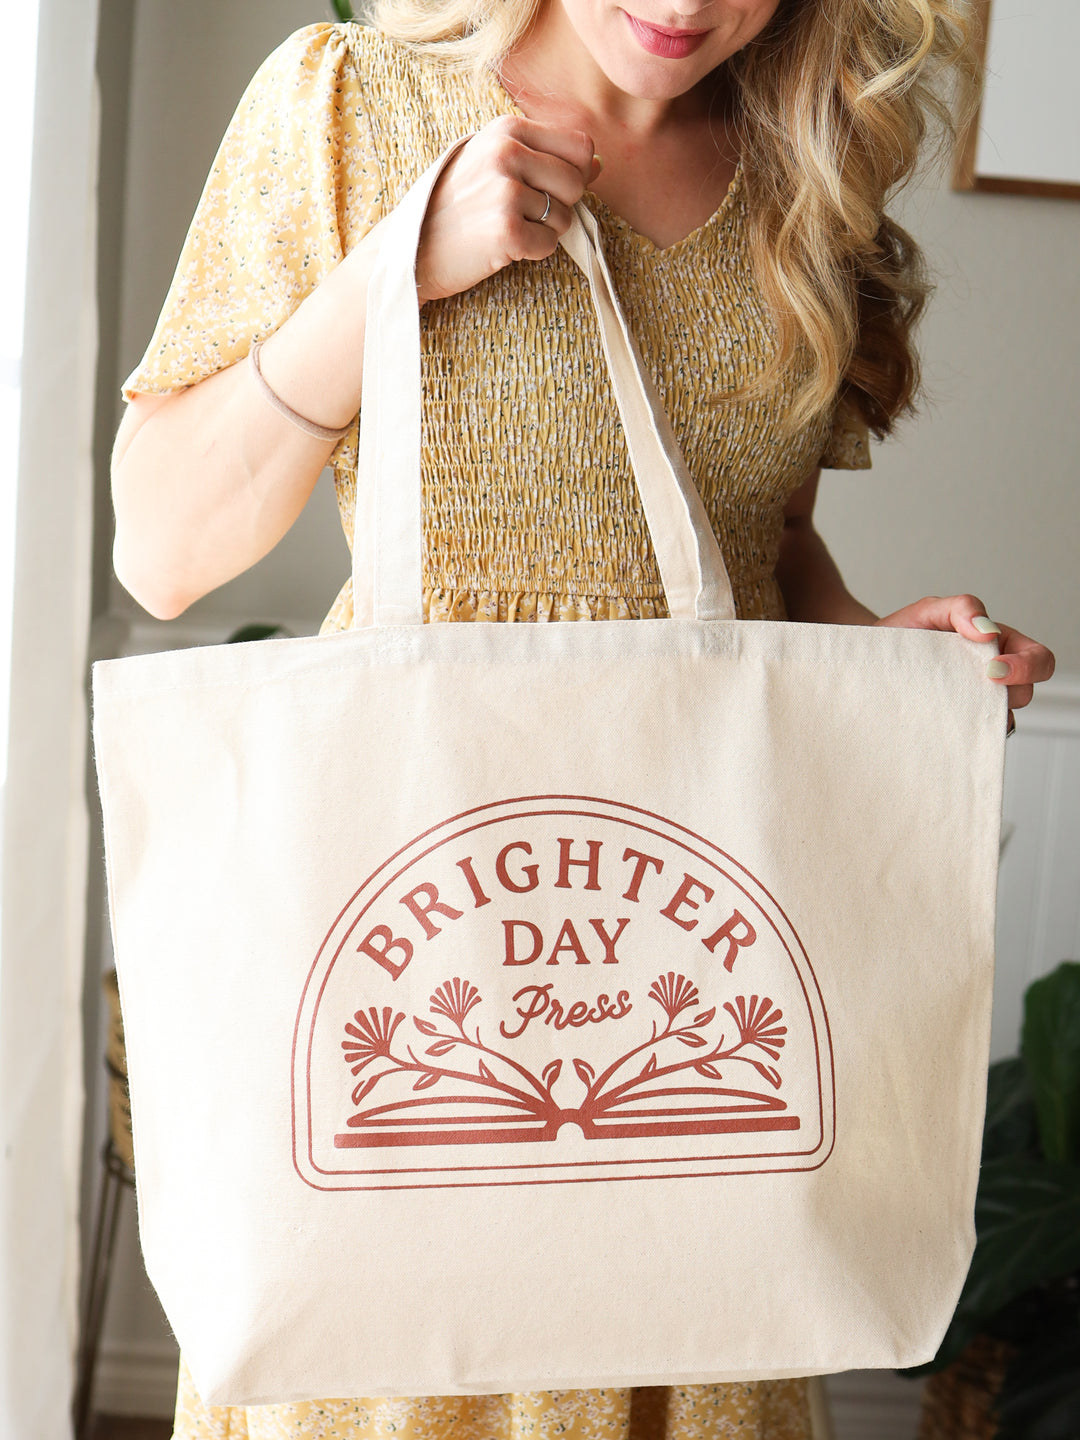 Brighter Day Press Library Bag